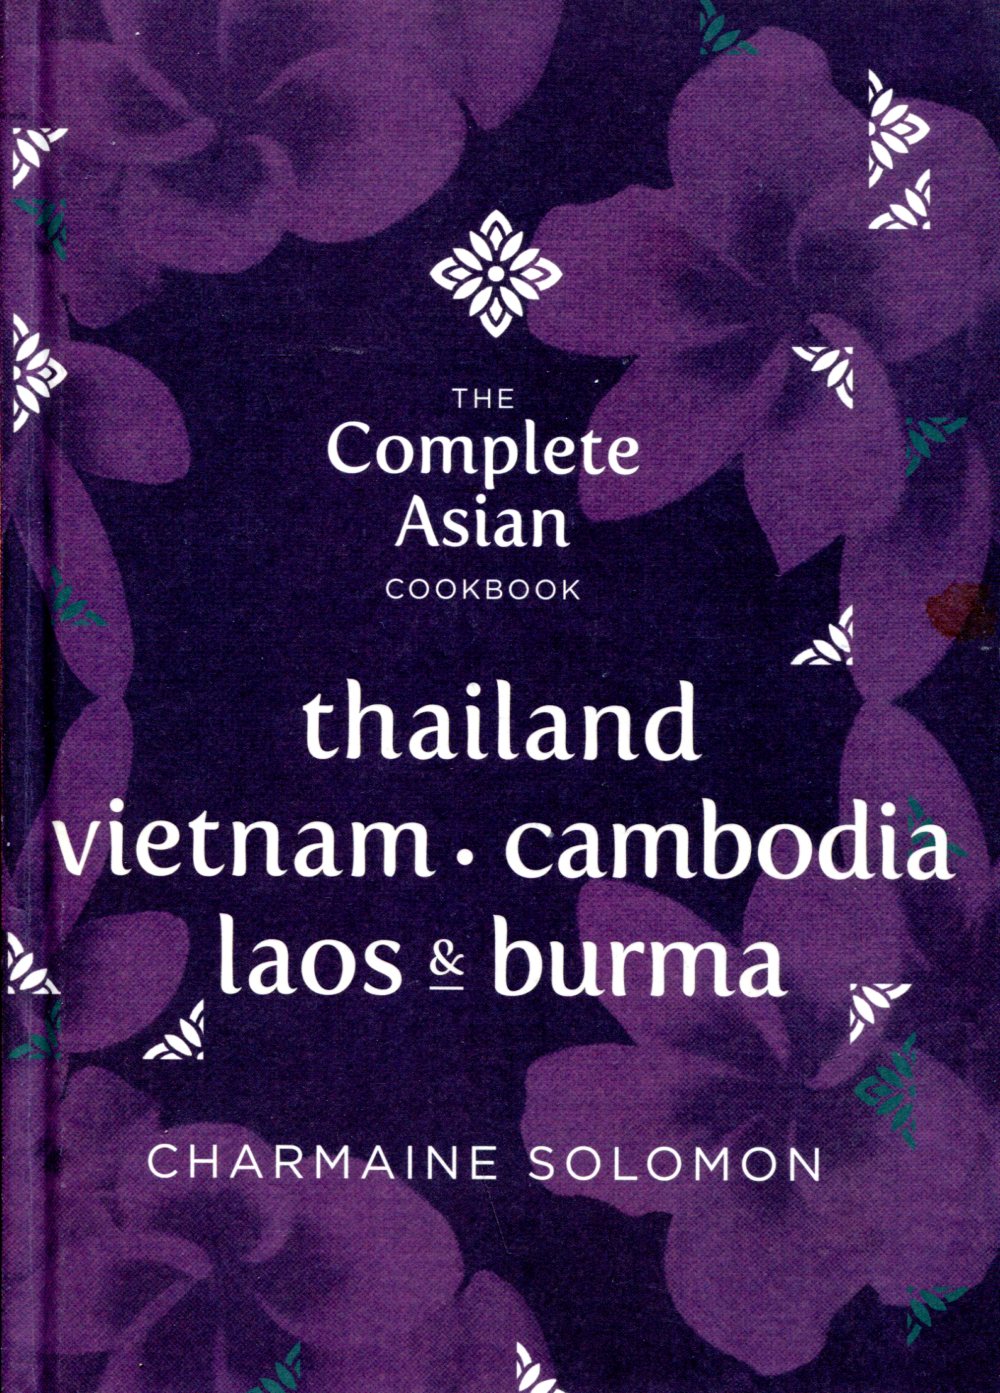 The Complete Asian cookbook - Thailand, vietnam, cambodia, Laos & Burma - Charmanine Solomon